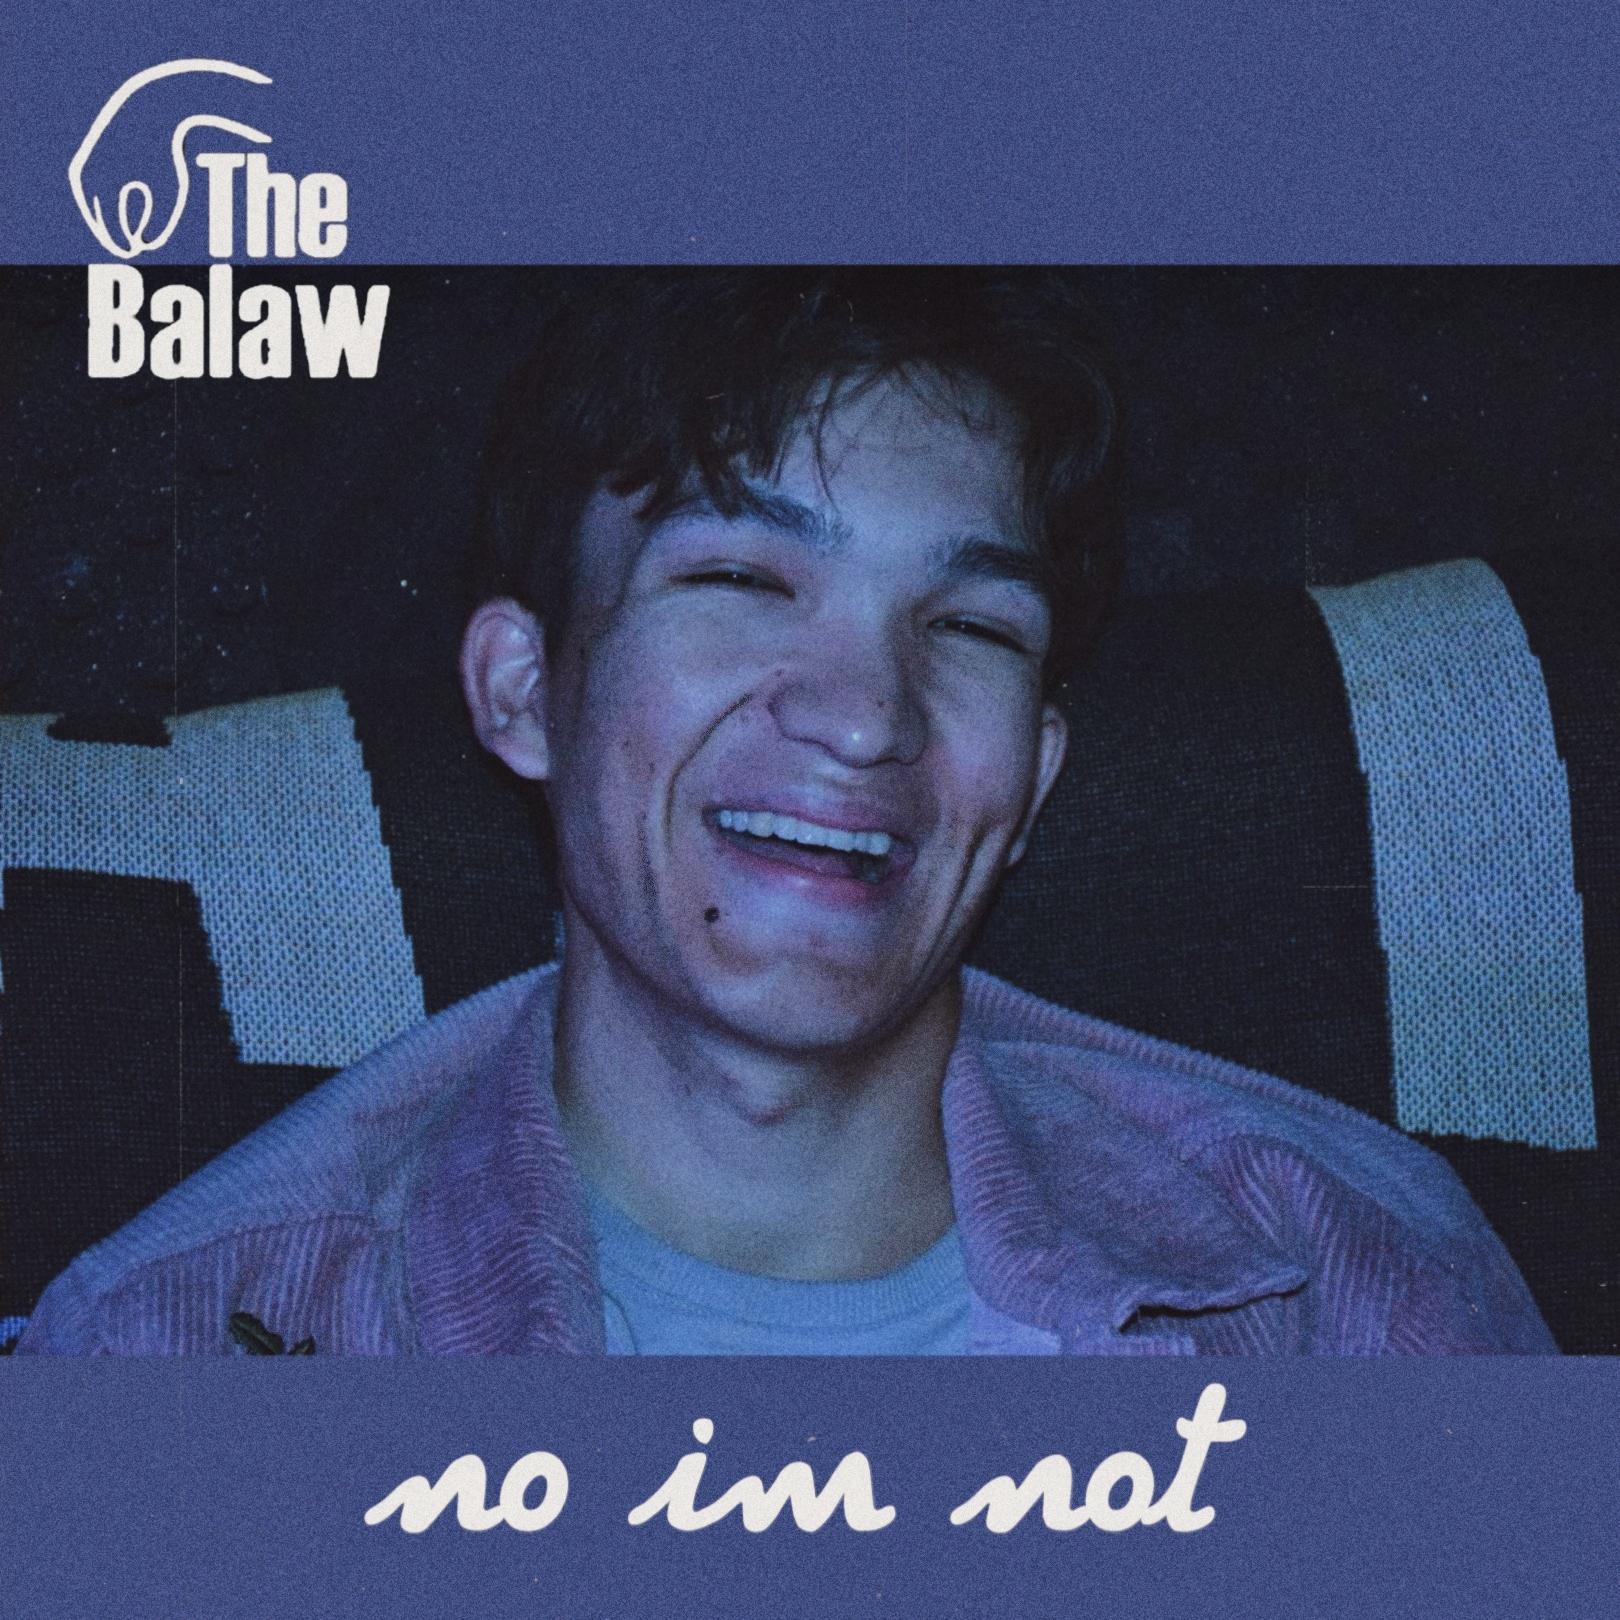 no im not歌词 歌手八佬Balaw / 艾菊KonA. / ZheN-专辑no im not-单曲《no im not》LRC歌词下载